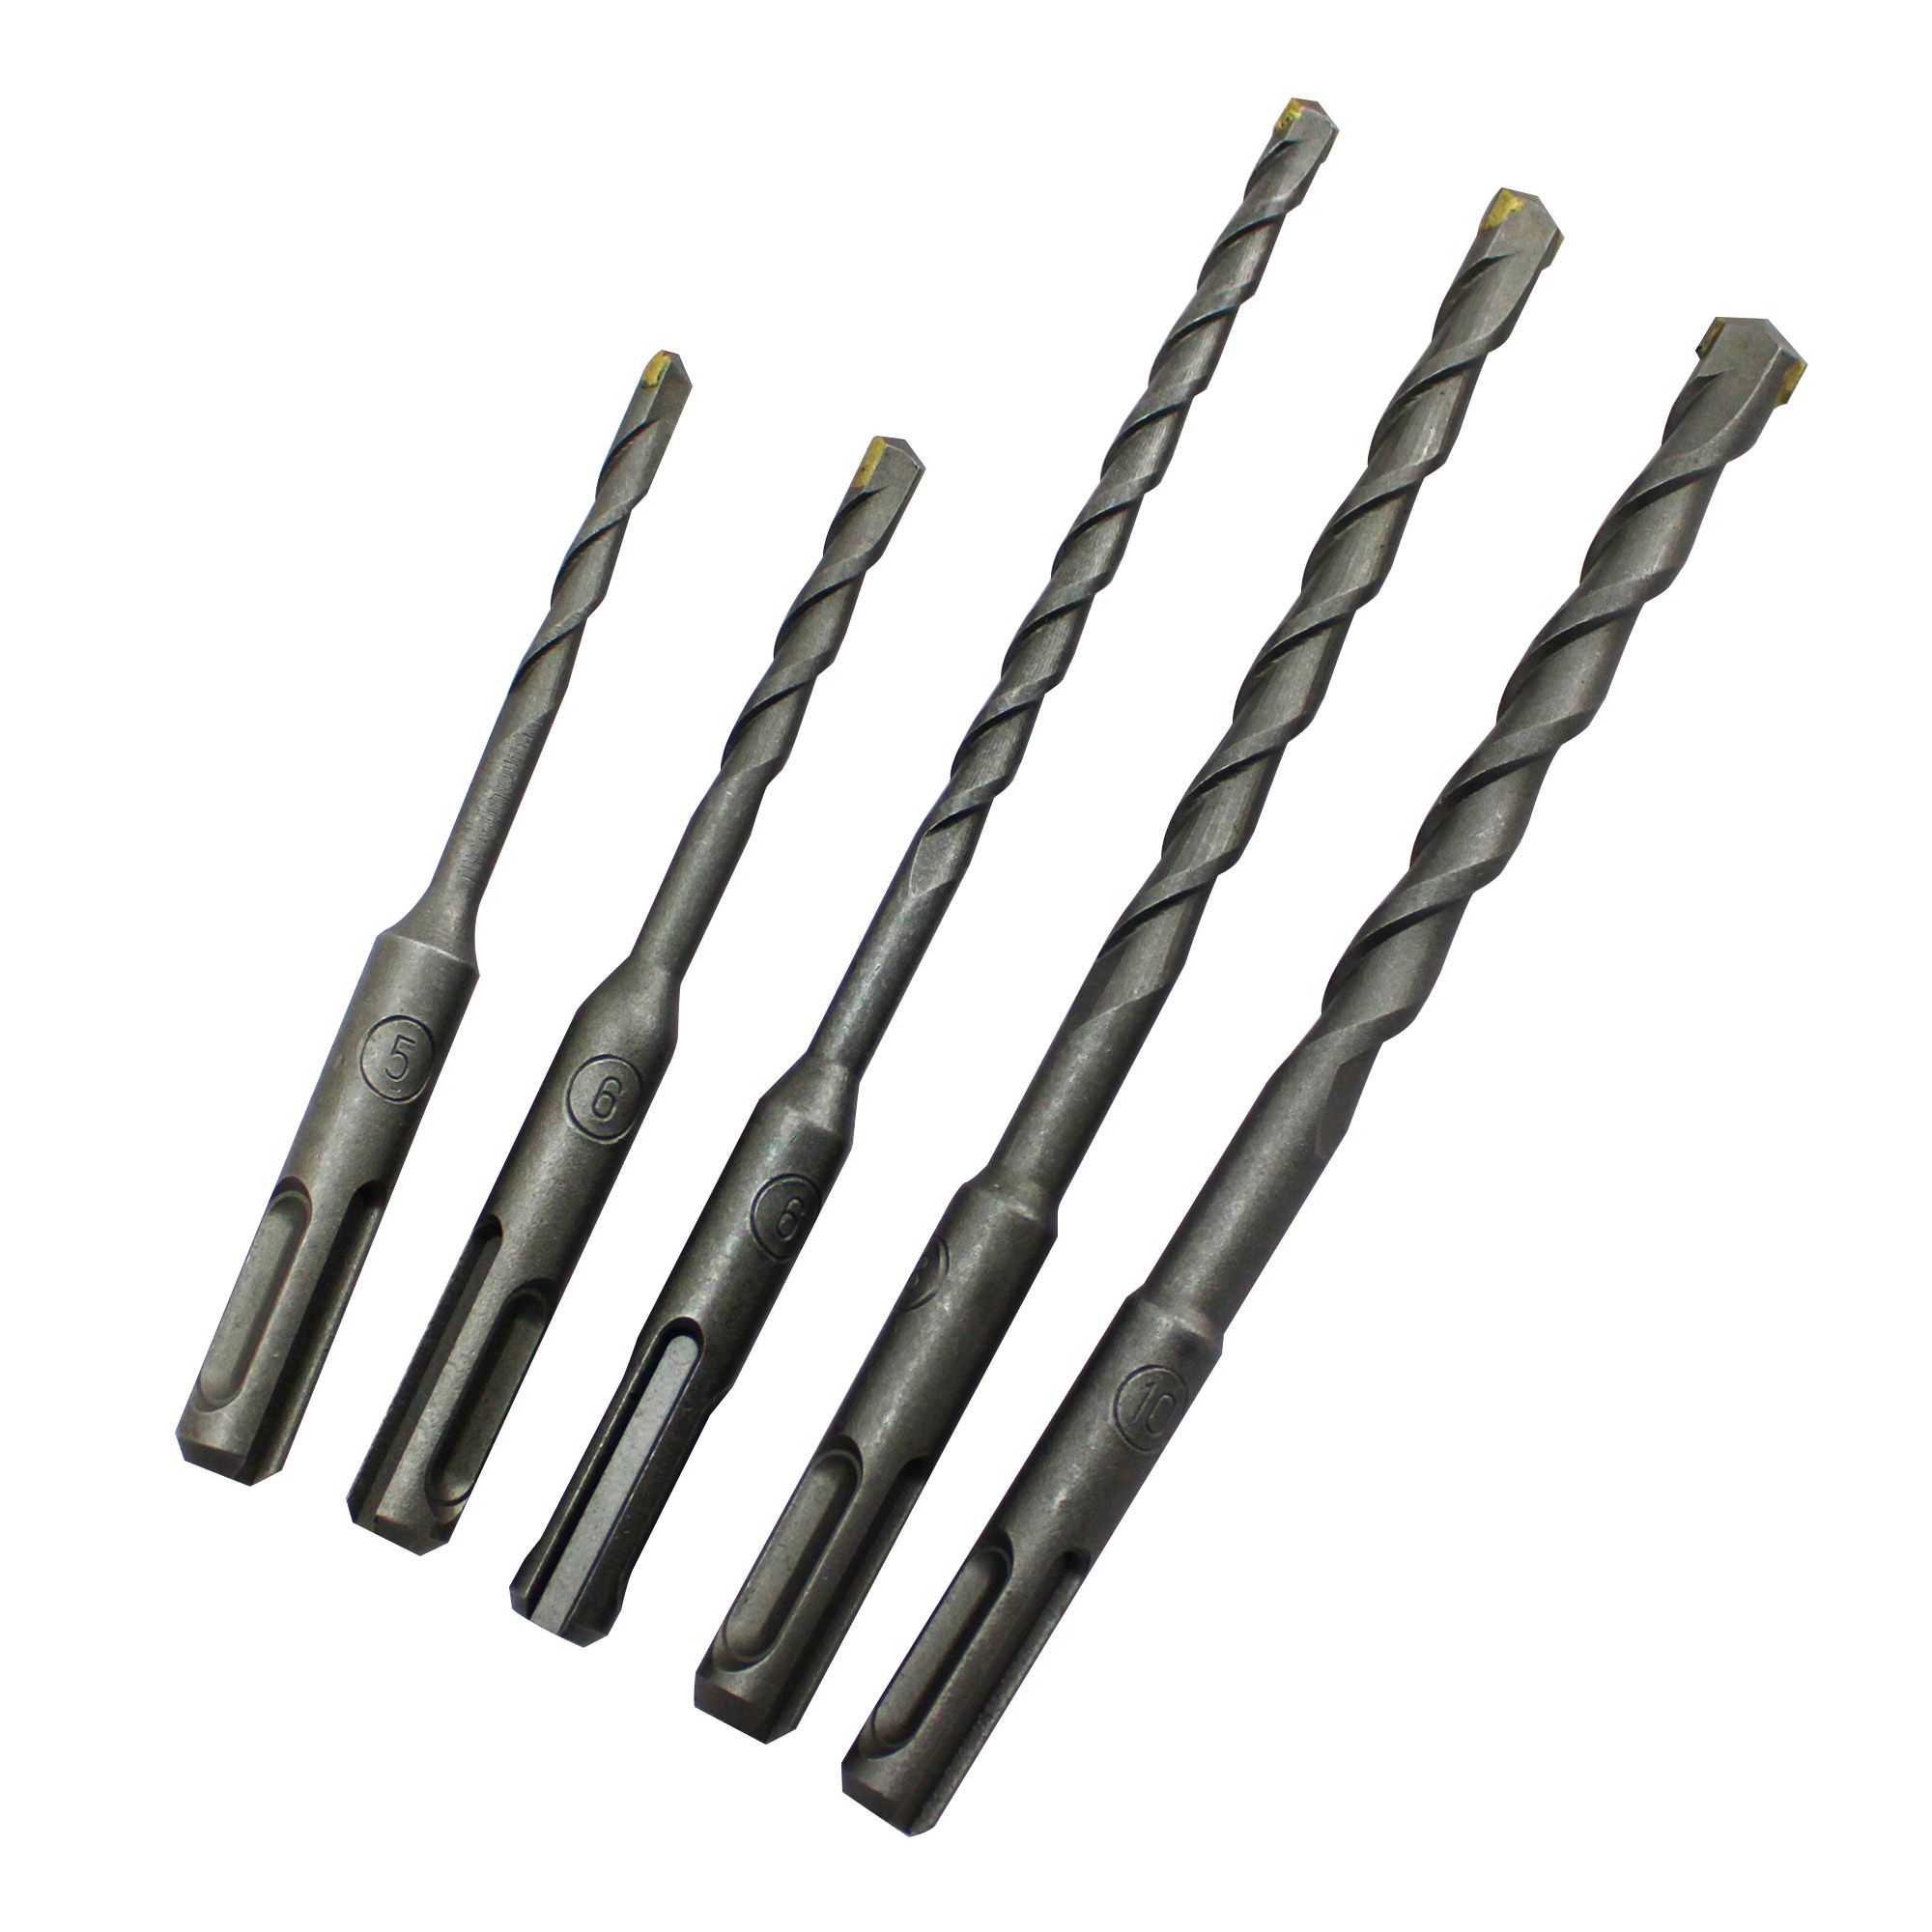 SDS-PLUS Type Rotary Hammer Bits Set, 5 Piece